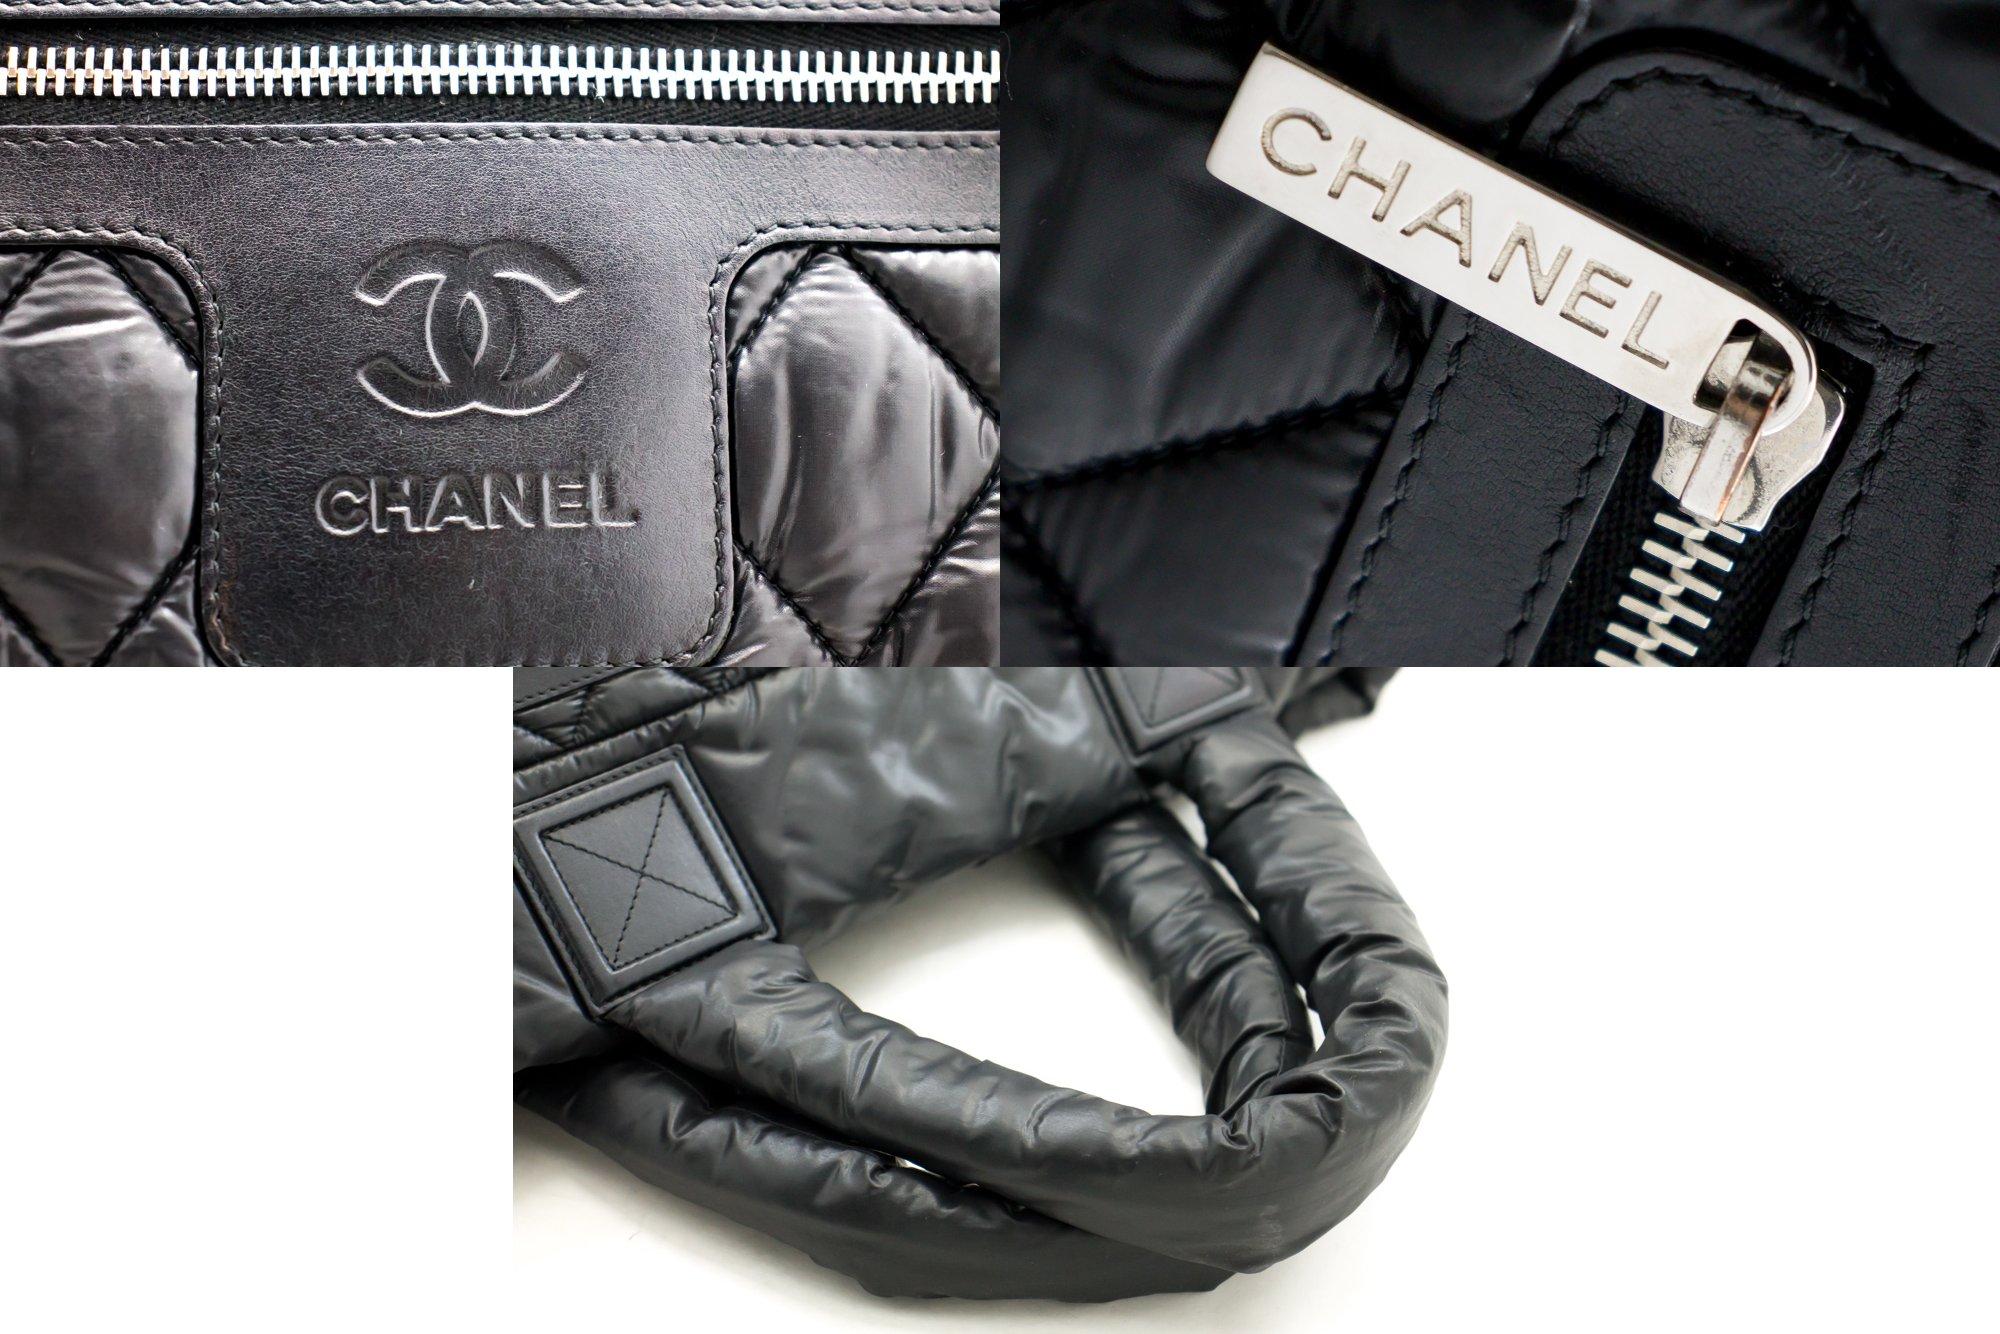 CHANEL Coco Cocoon PM Nylon Tote Bag Handbag Leather Black 3